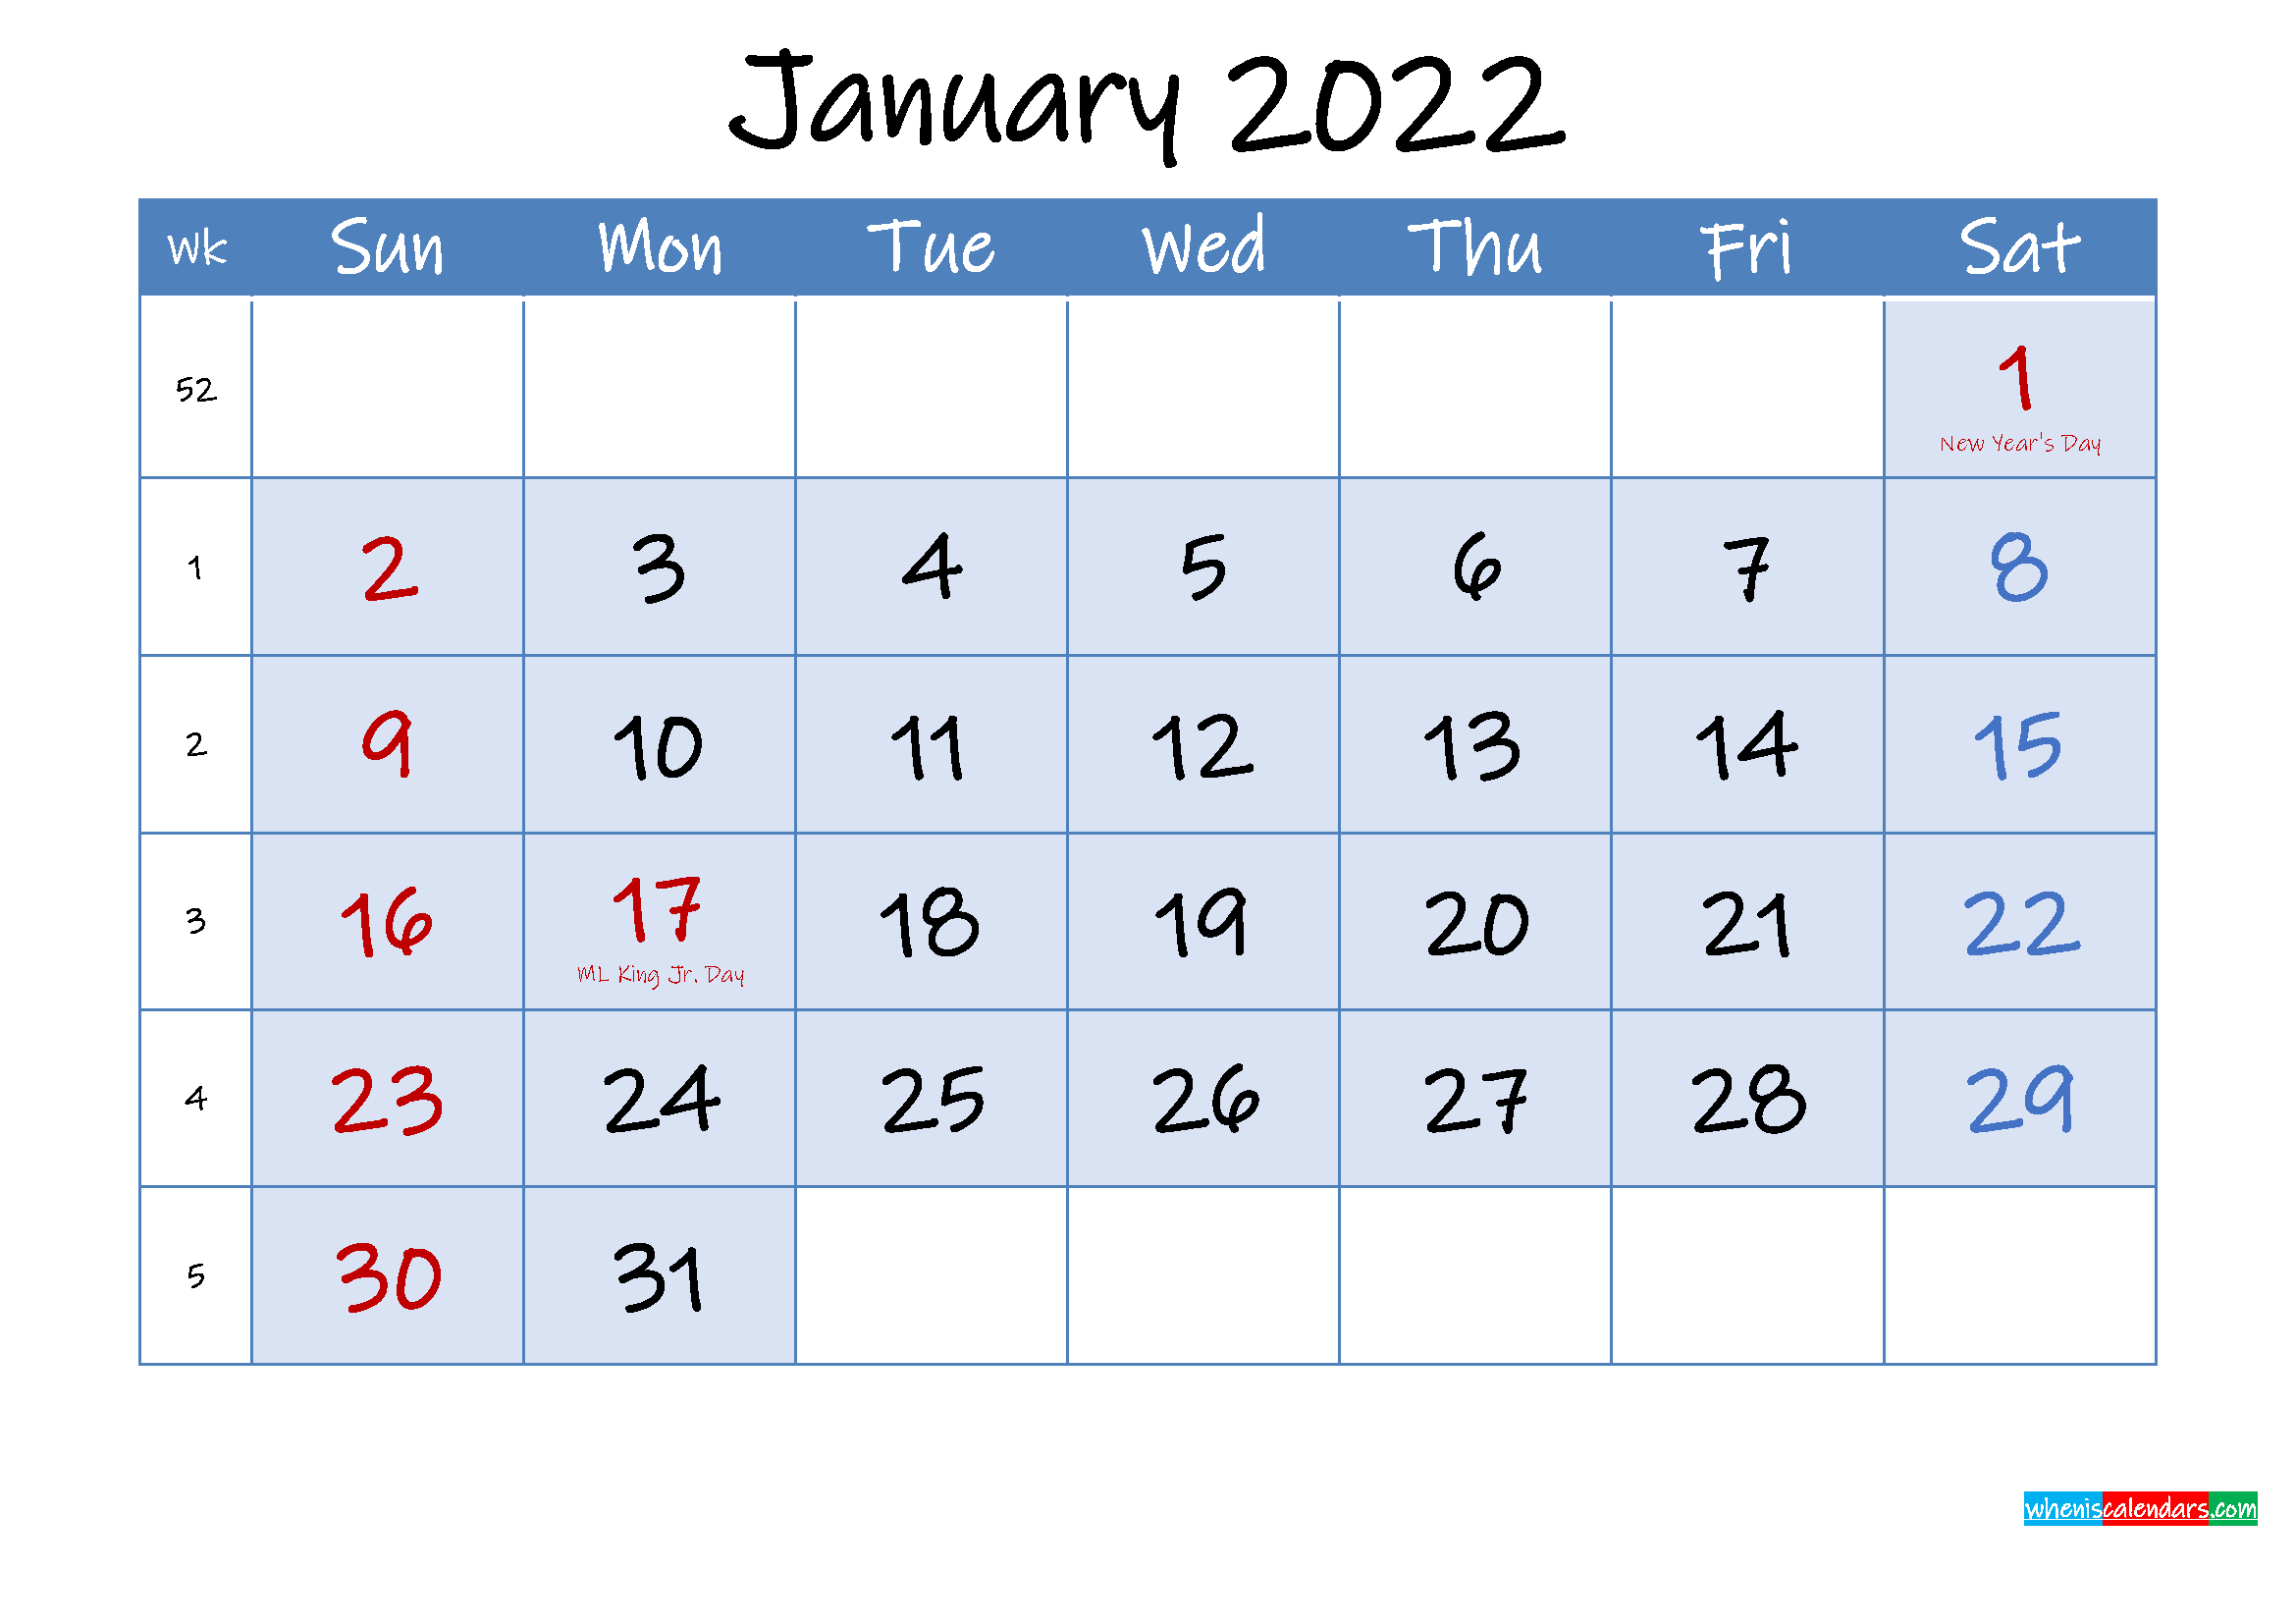 Free Printable January 2022 Calendar - Template Ink22M97